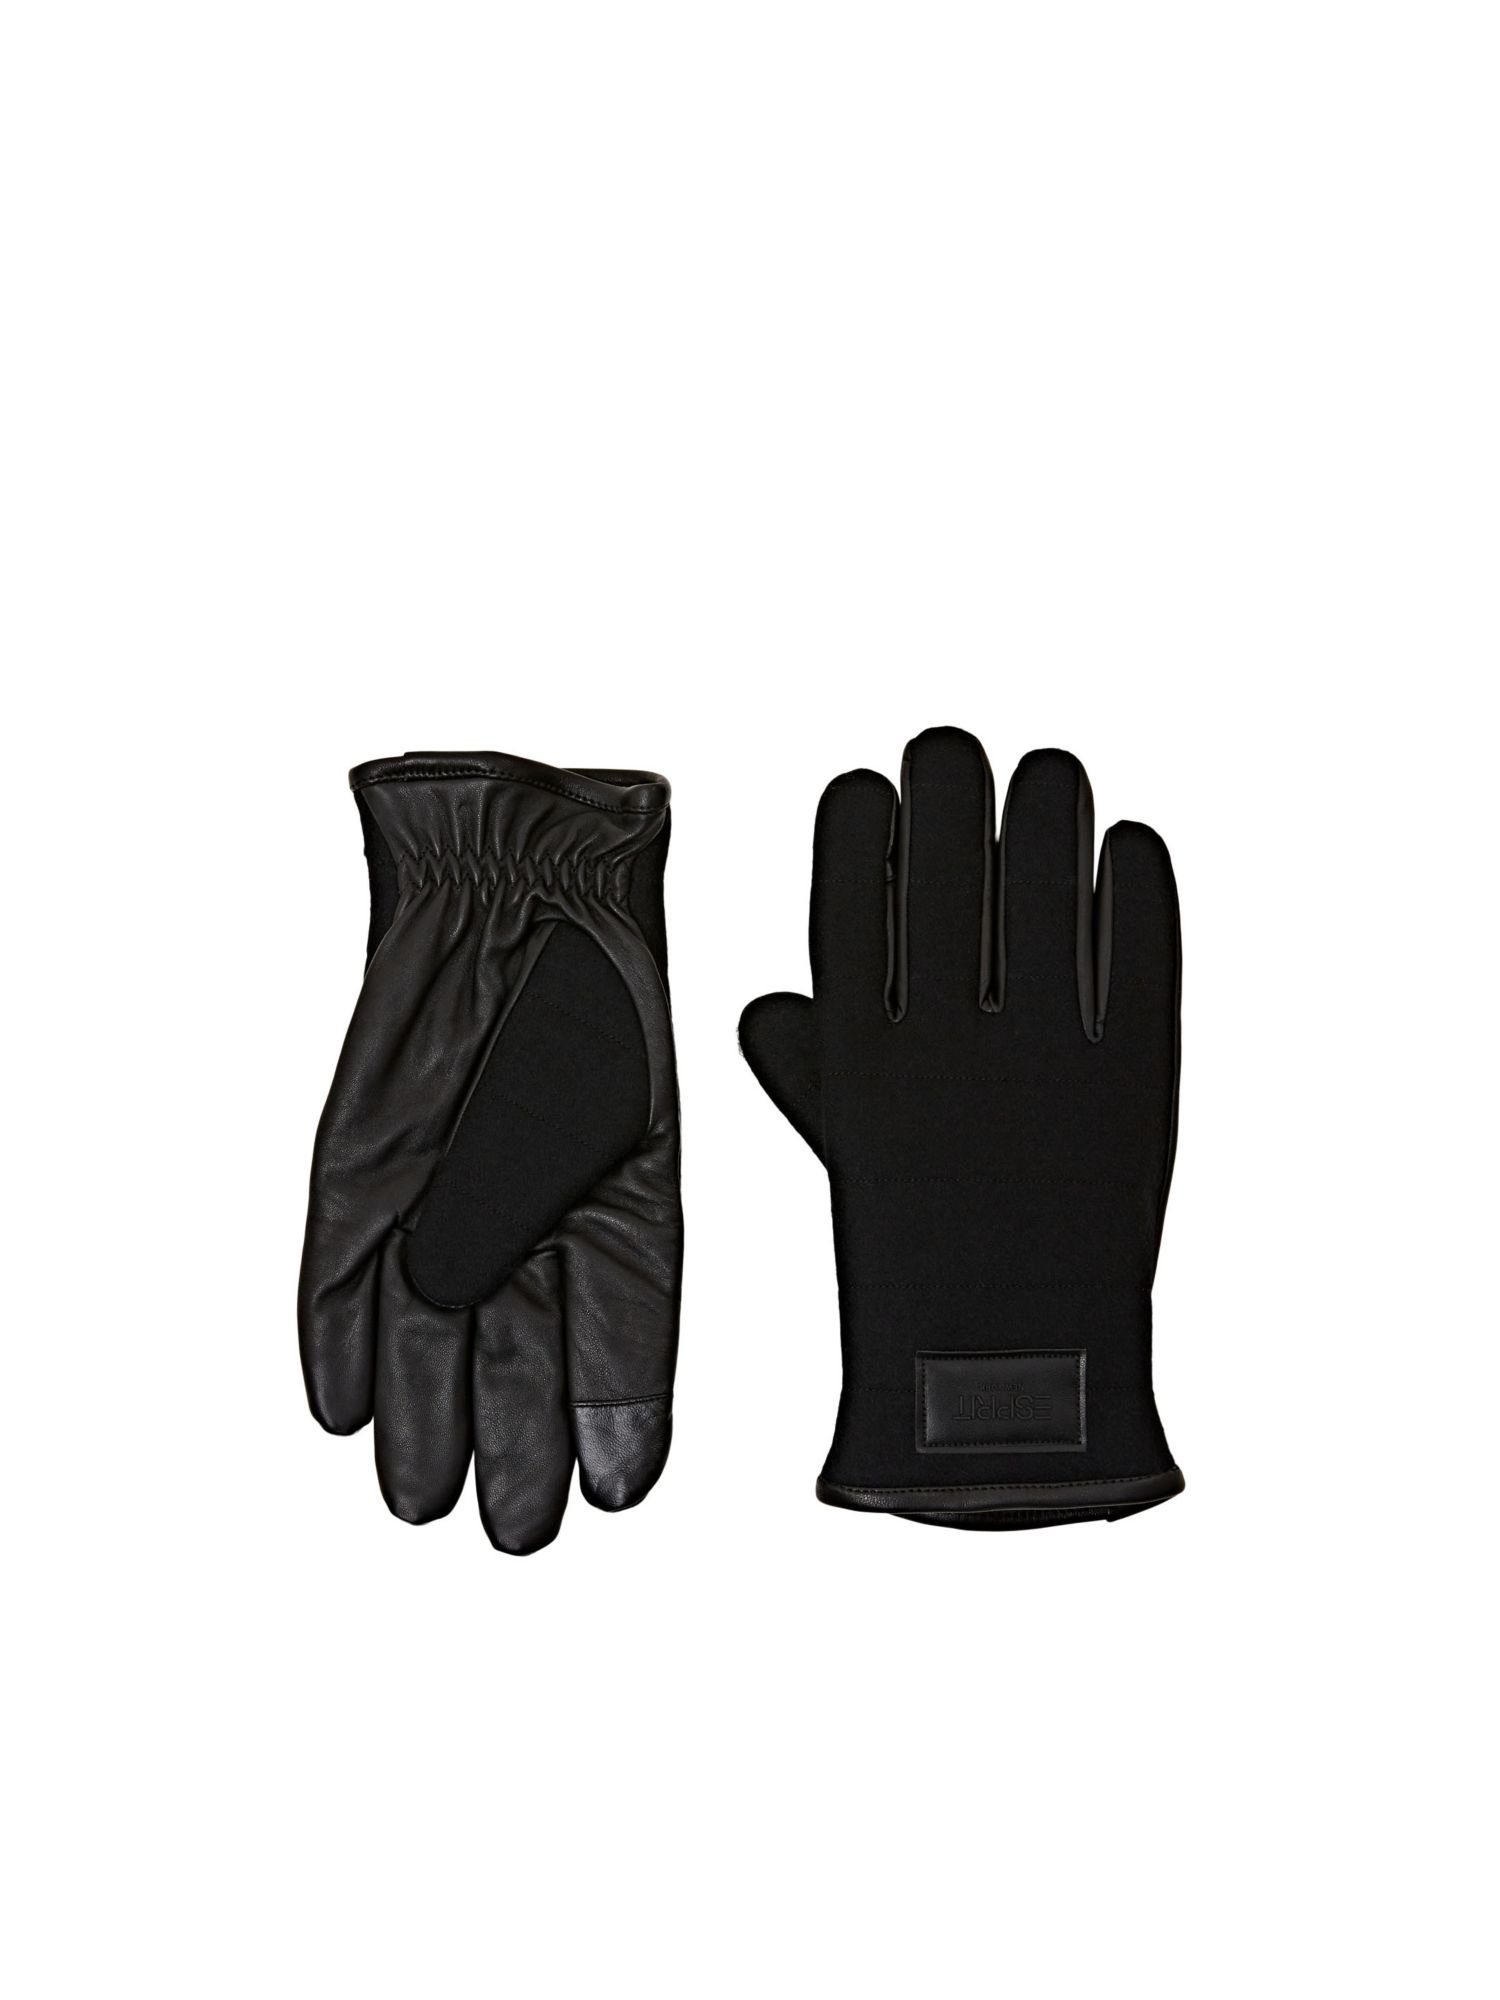 Esprit Lederhandschuhe Handschuhe aus Leder und Wolle | Handschuhe